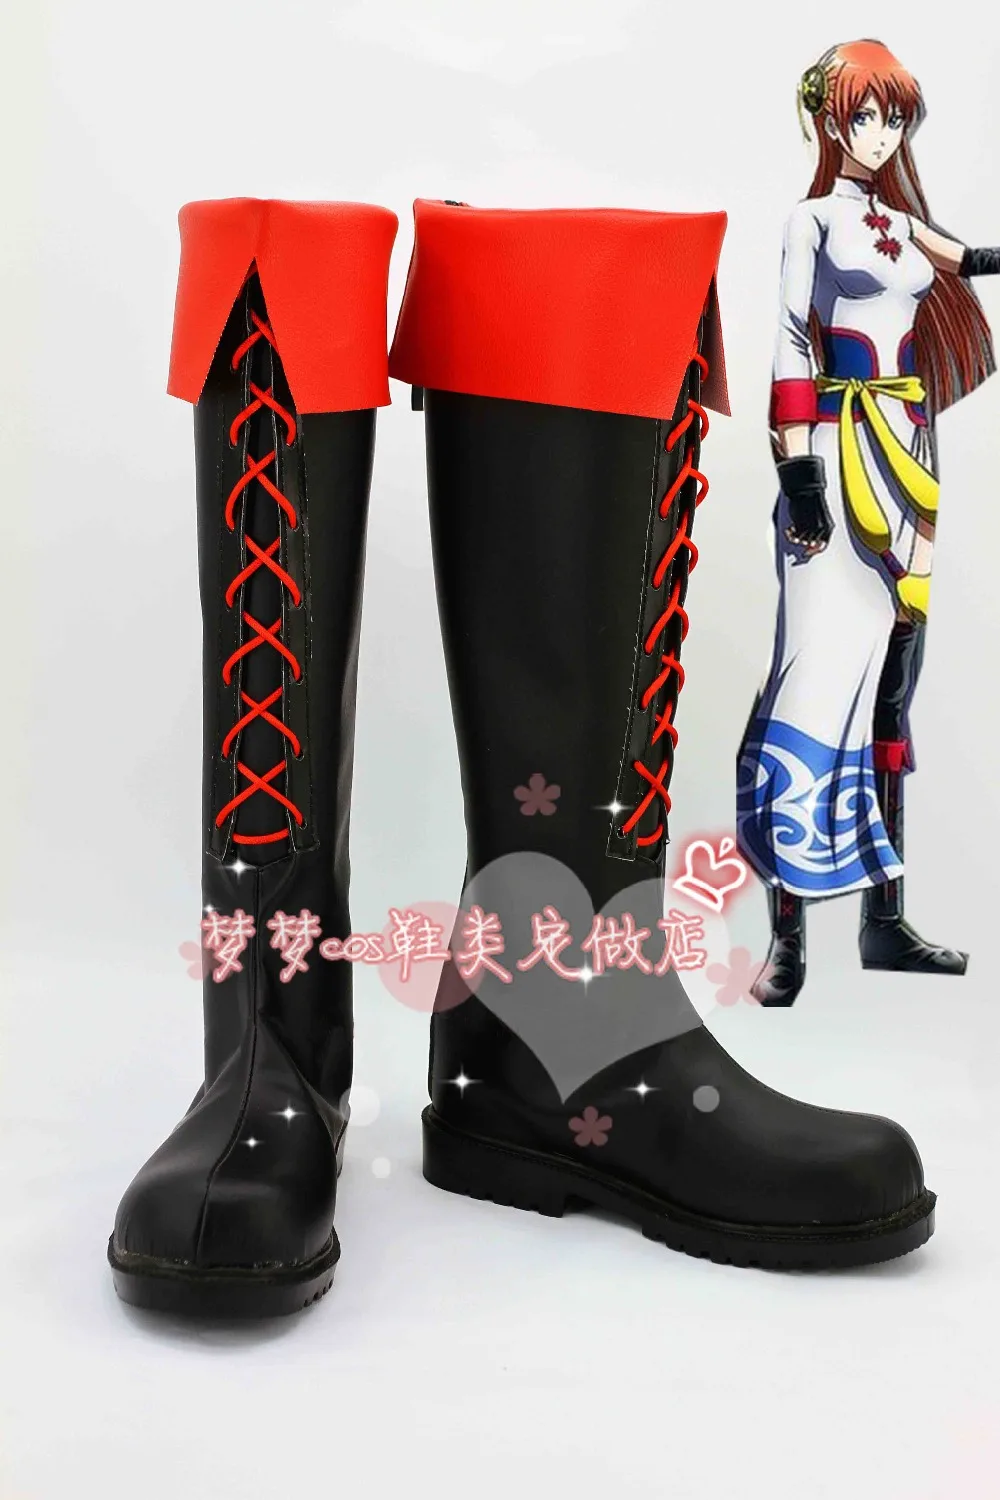 Anime high heel boots